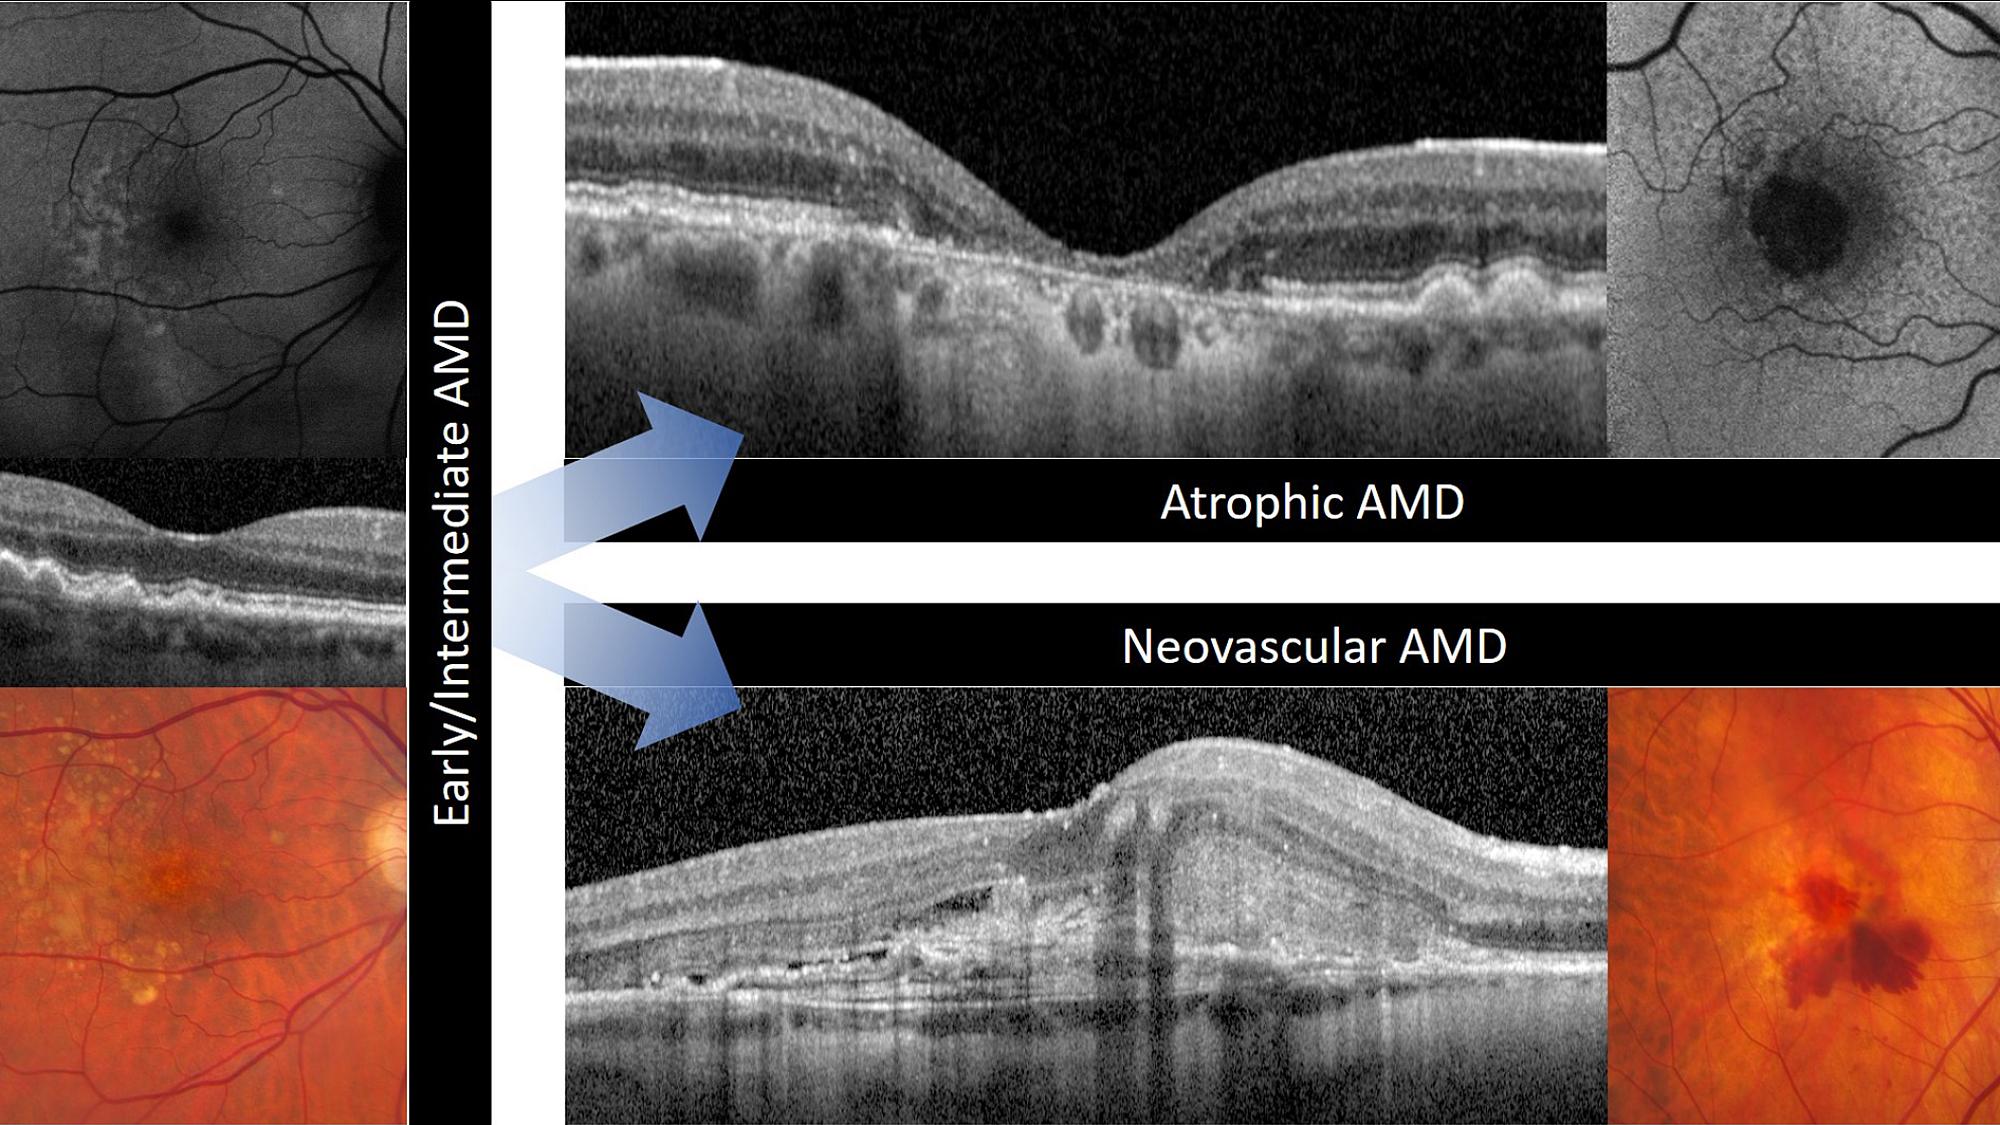 AMD disease progression research imaging.